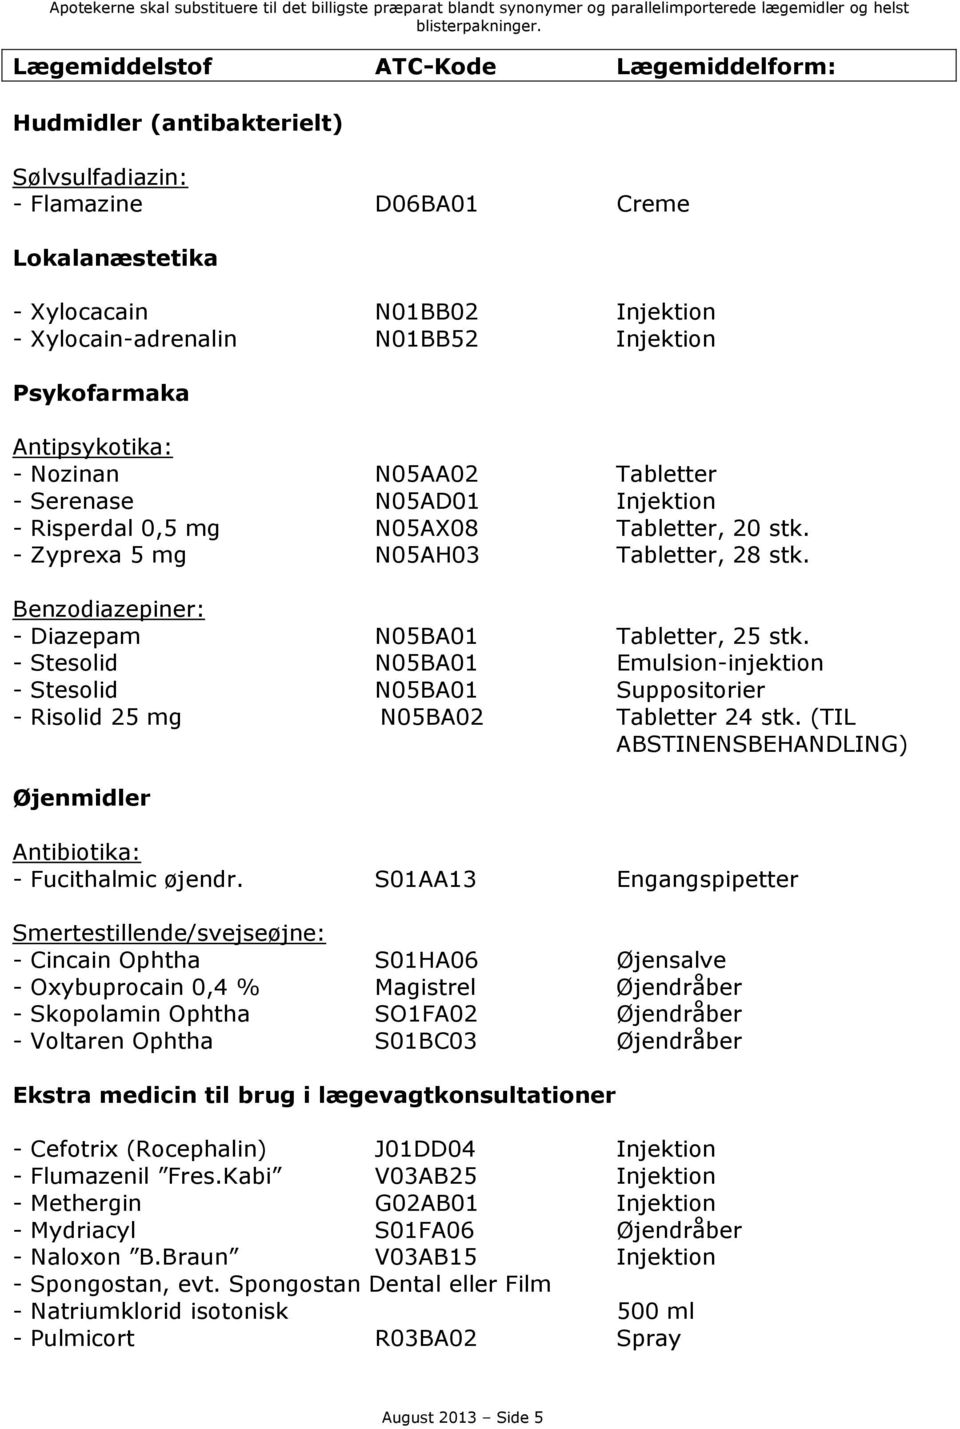 Benzodiazepiner: - Diazepam N05BA01 Tabletter, 25 stk. - Stesolid N05BA01 Emulsion-injektion - Stesolid N05BA01 Suppositorier - Risolid 25 mg N05BA02 Tabletter 24 stk.